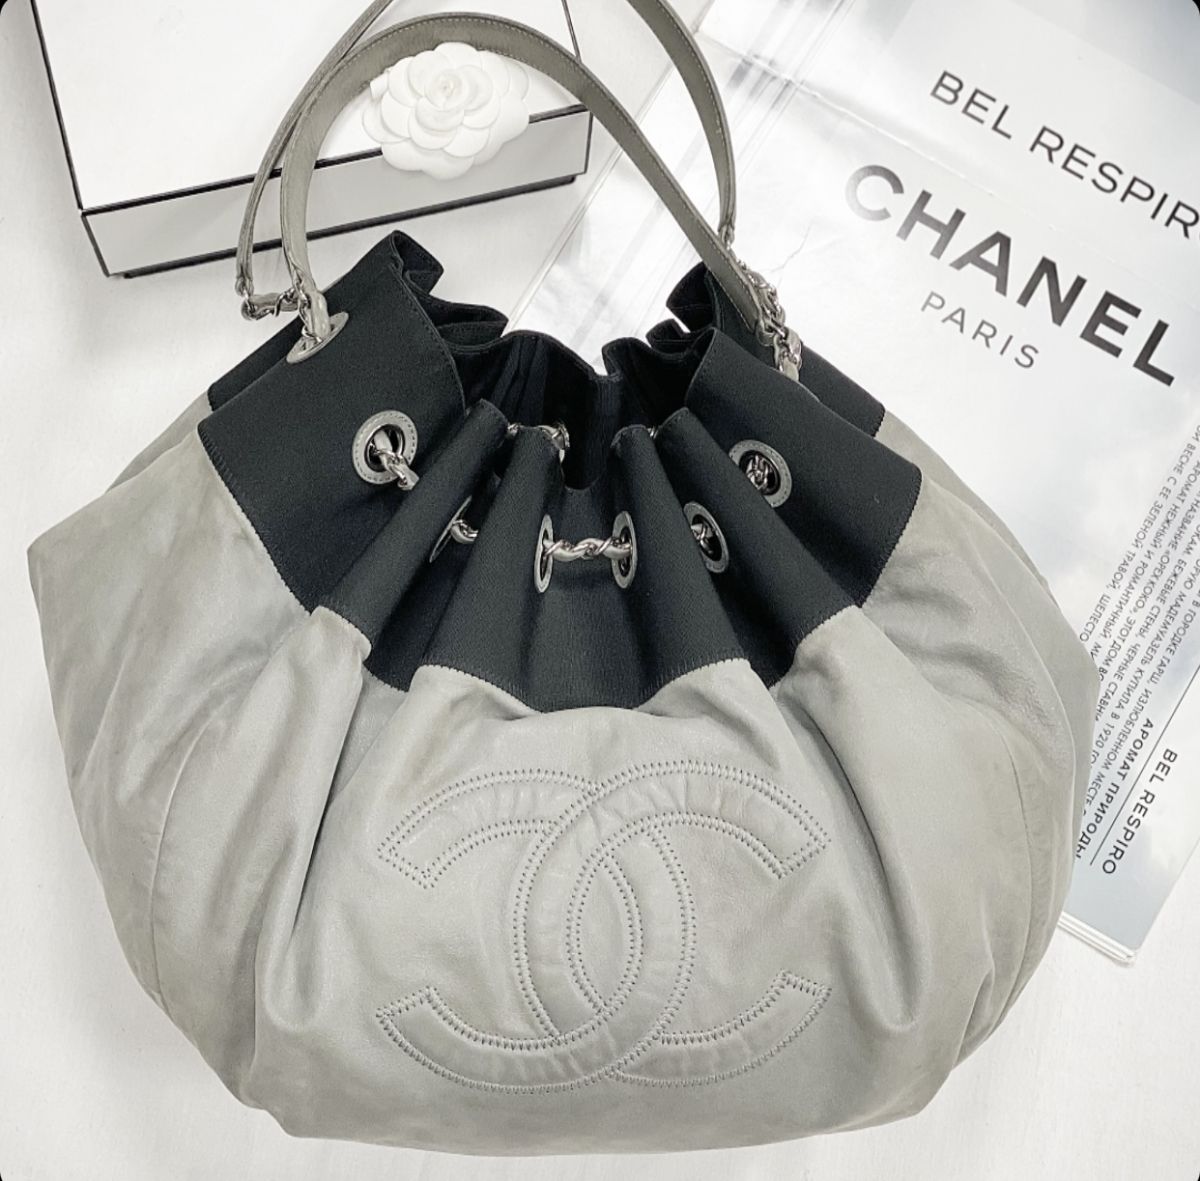 Сумка Chanel размер большой цена 69 232 руб 